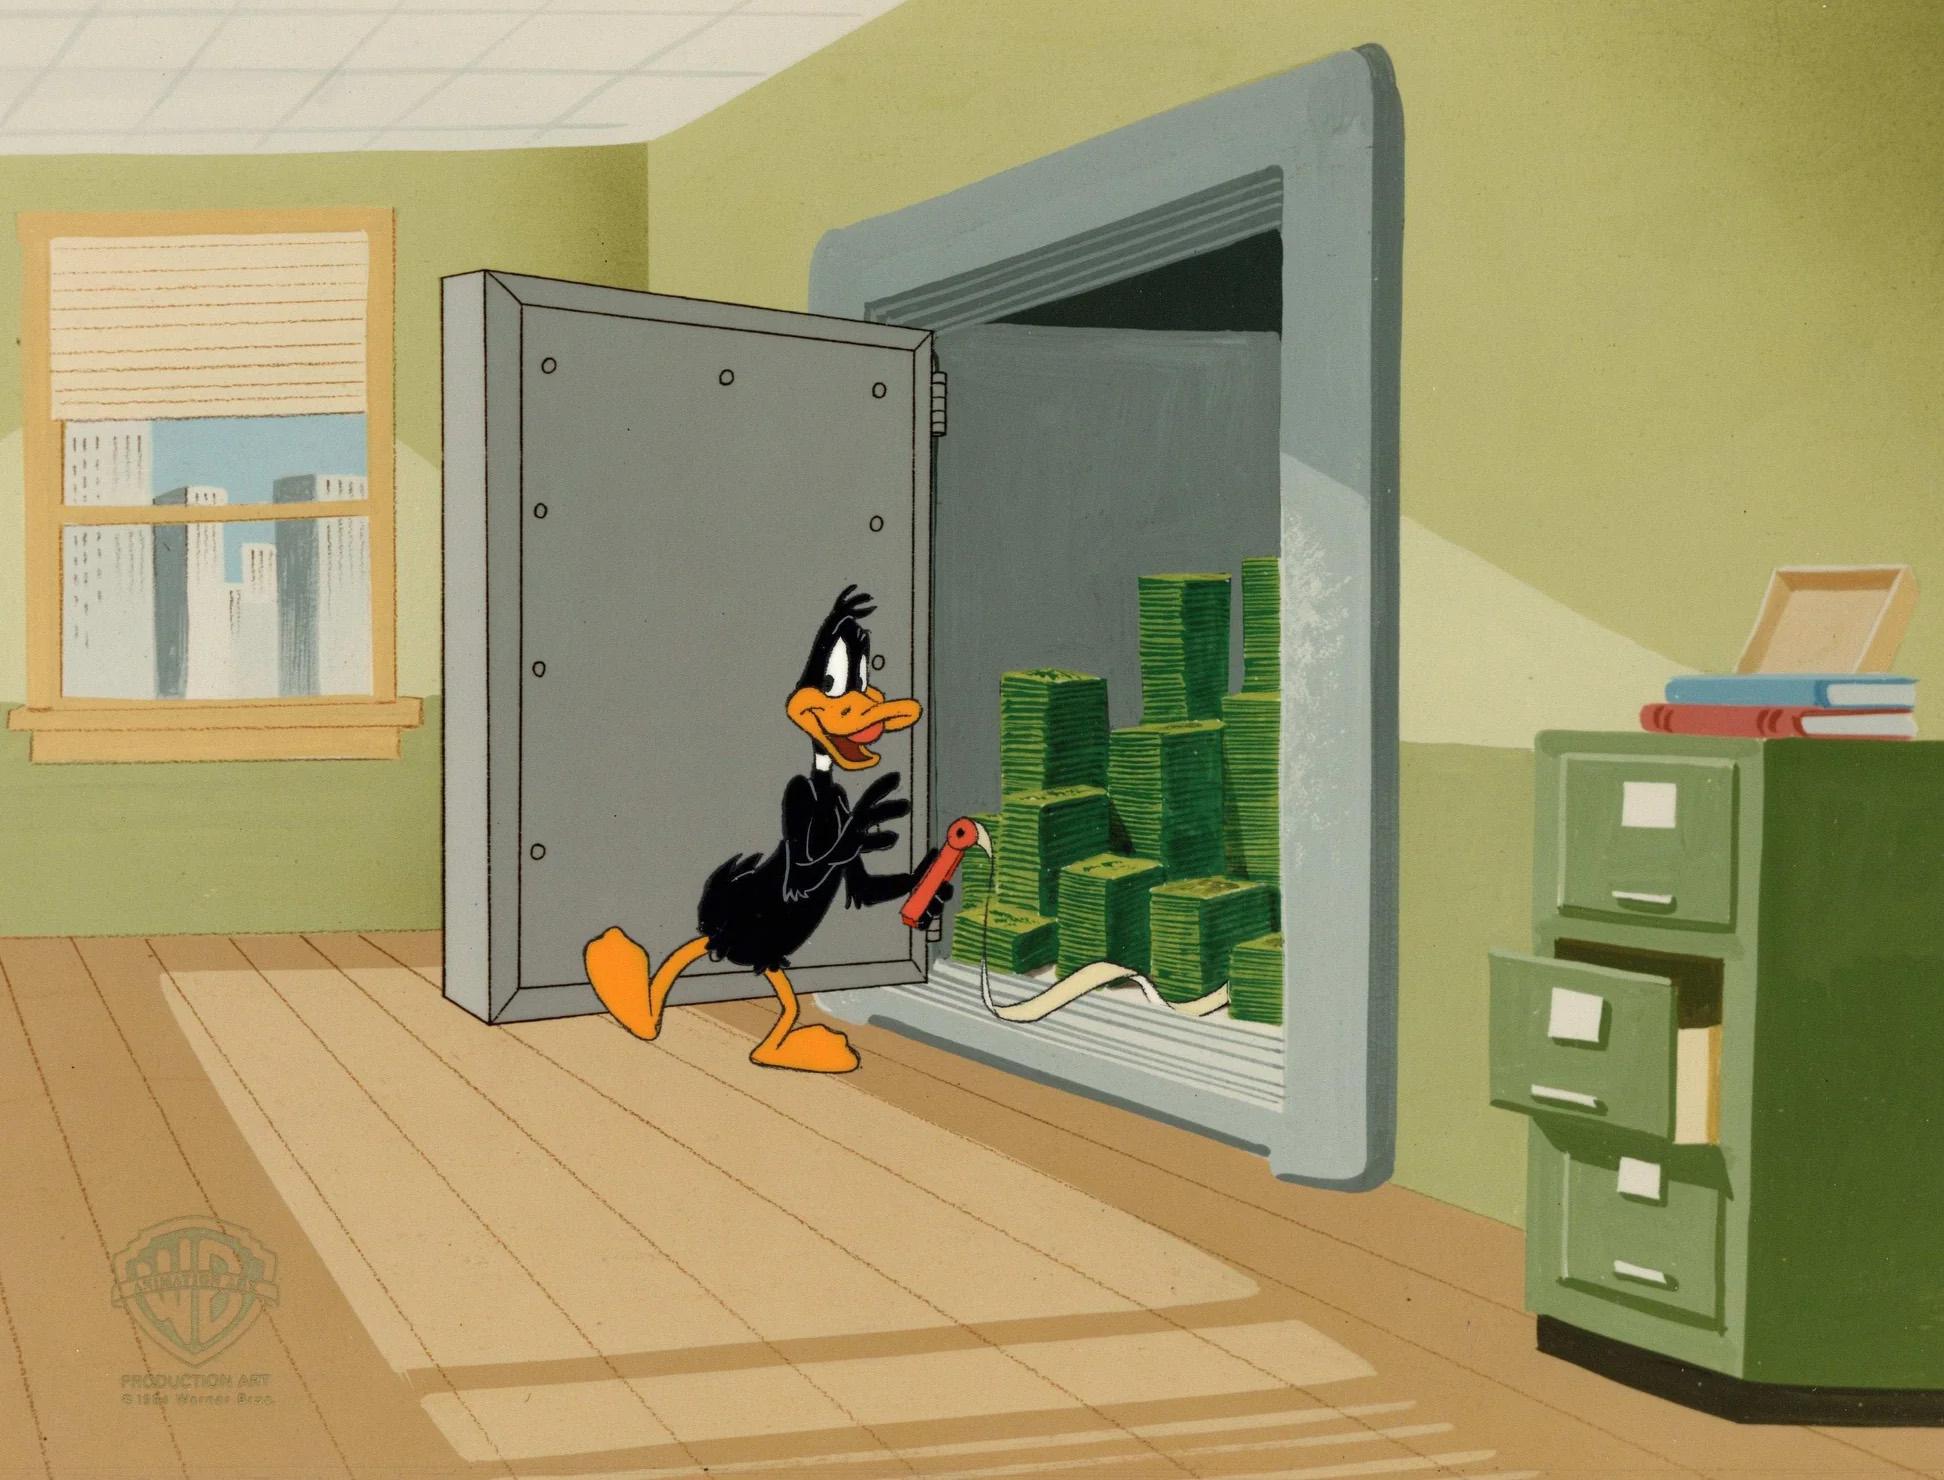 Looney Tunes Quackbusters Original Production Cel: Daffy Duck - Art by Looney Tunes Studio Artists